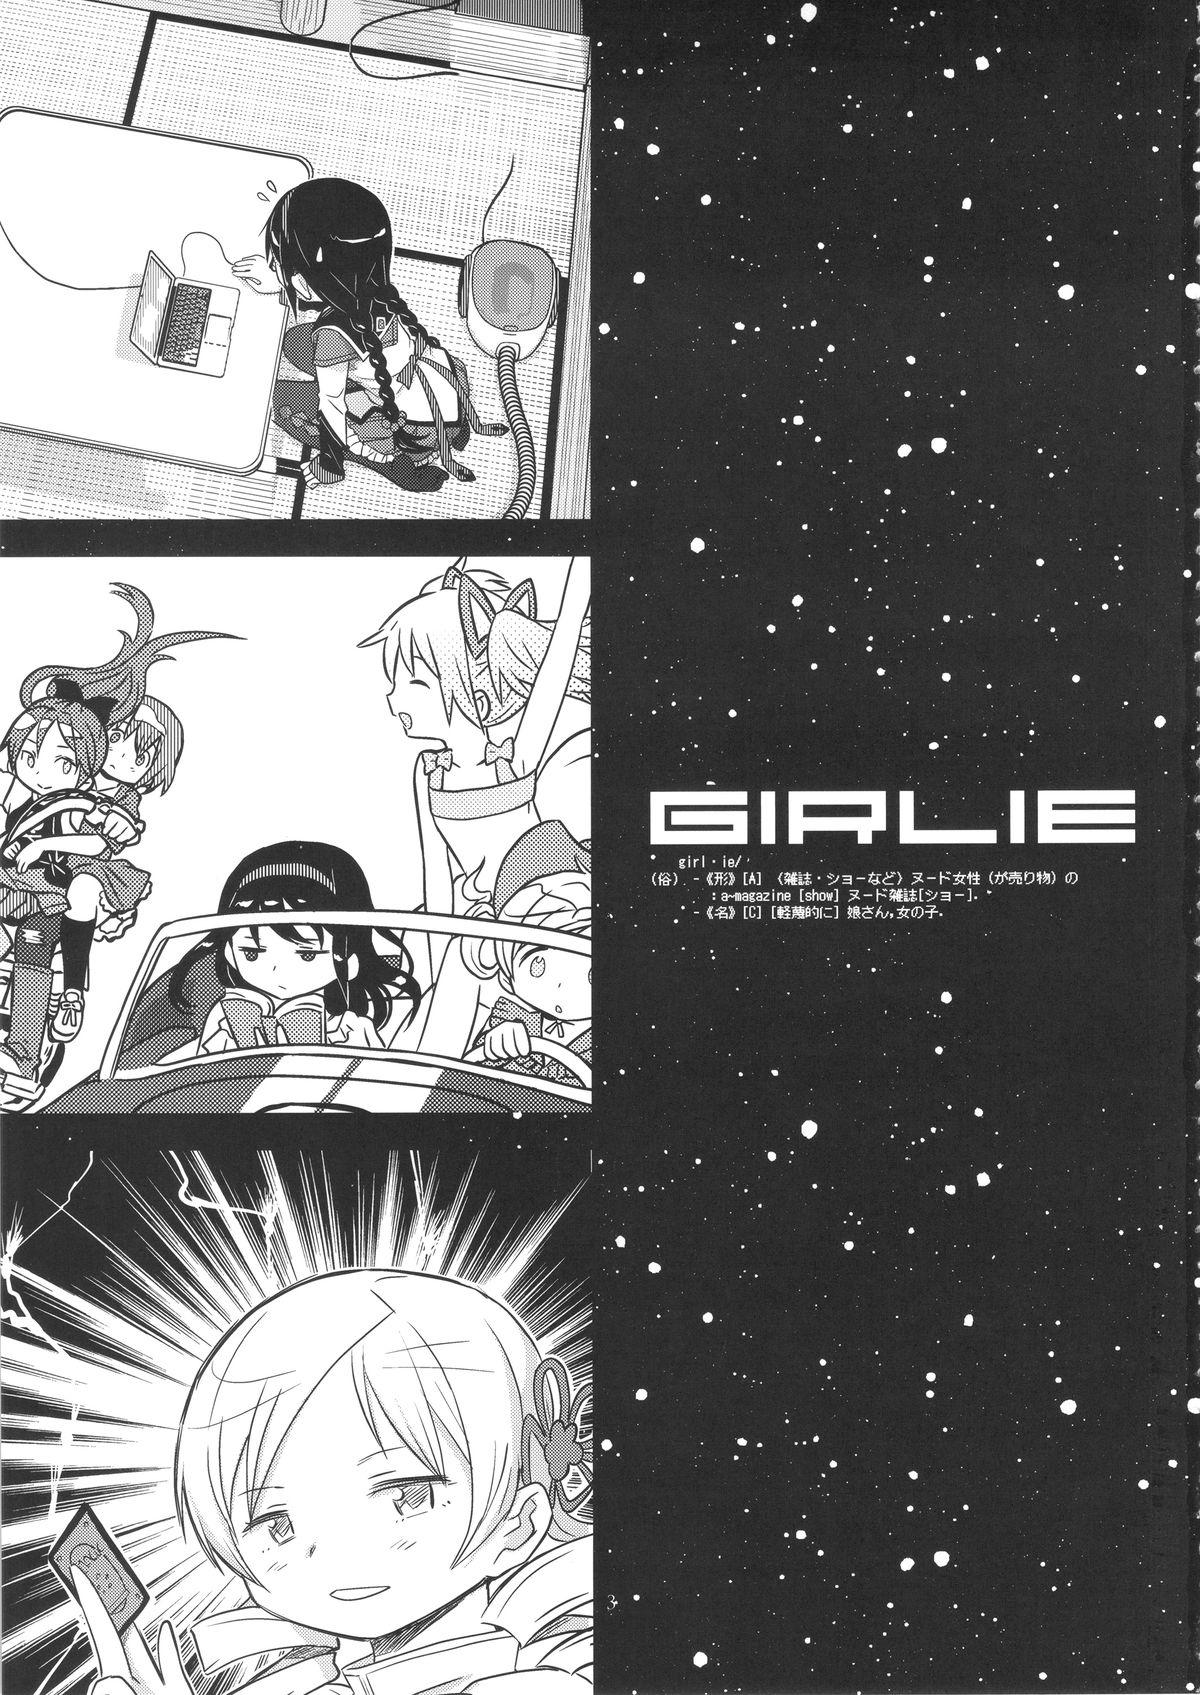 Girls GIRLIE:EX02 - Puella magi madoka magica Animation - Page 3